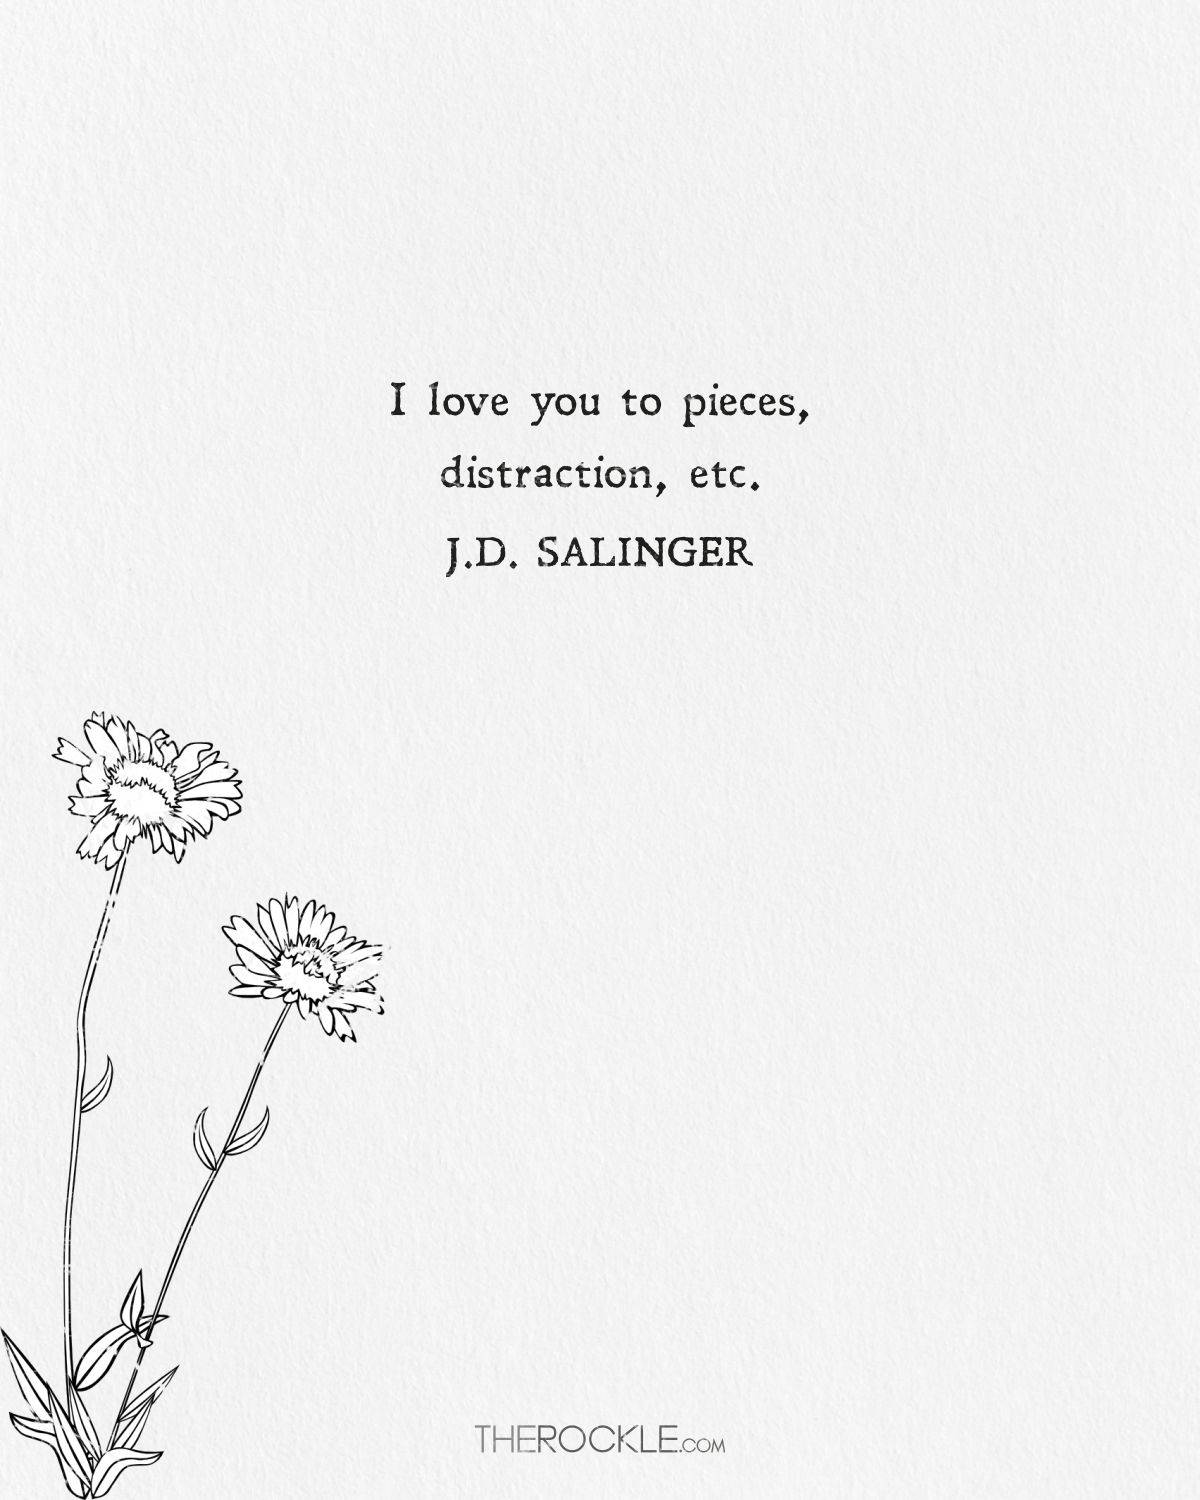 JD Salinger quote